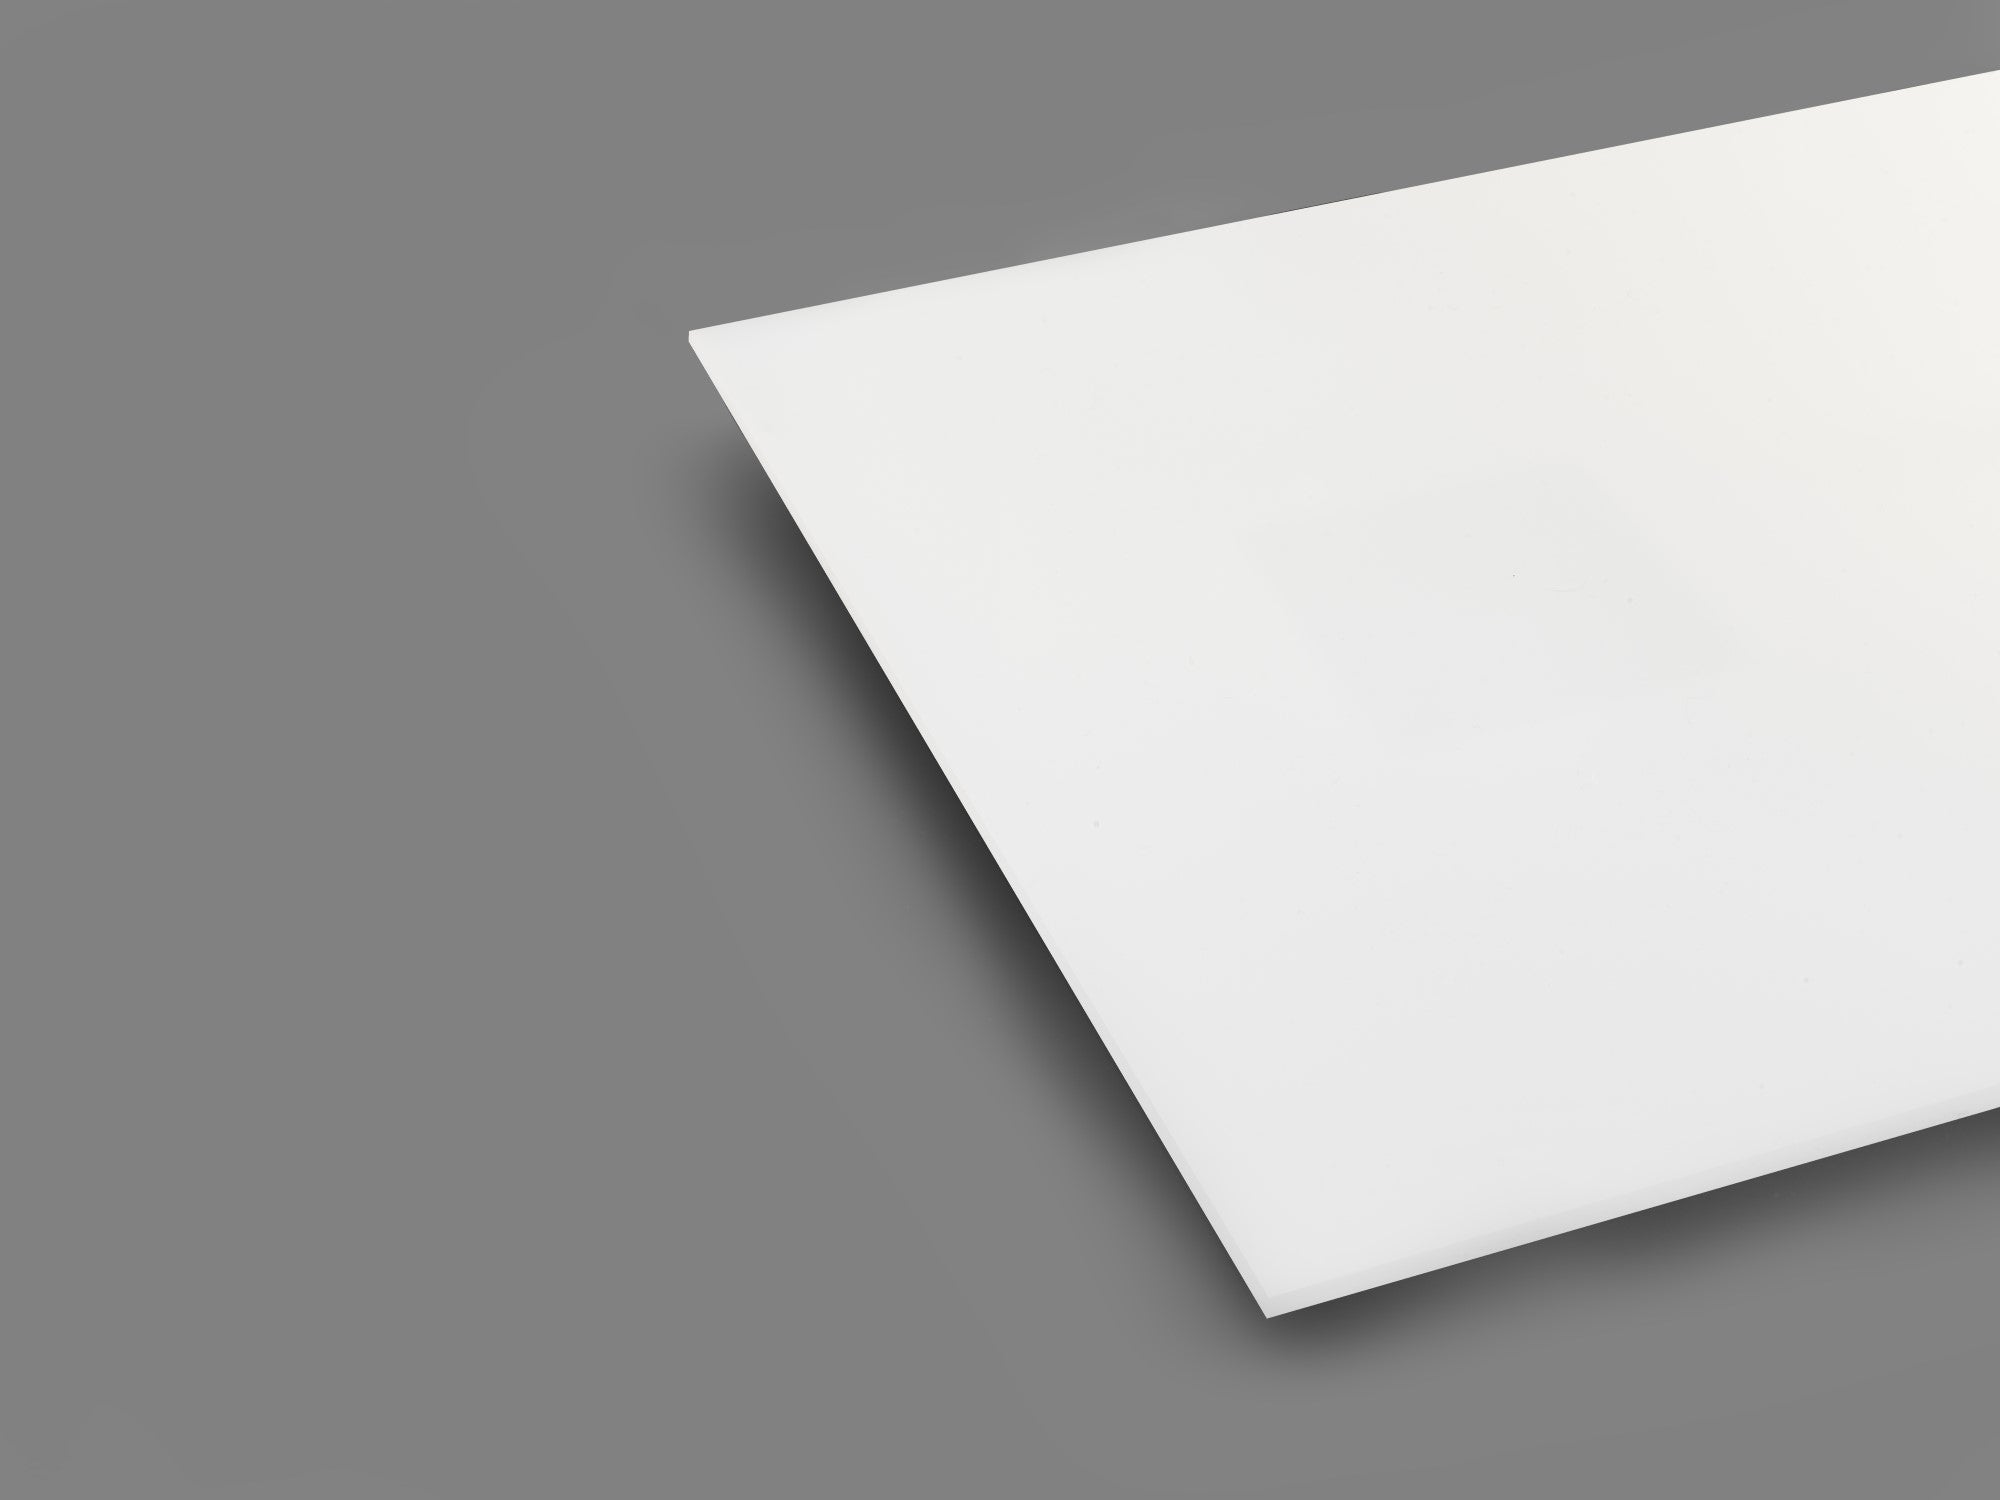 1/4-Thick 24 x 36 #2447 White Plexiglass Acrylic Sheet